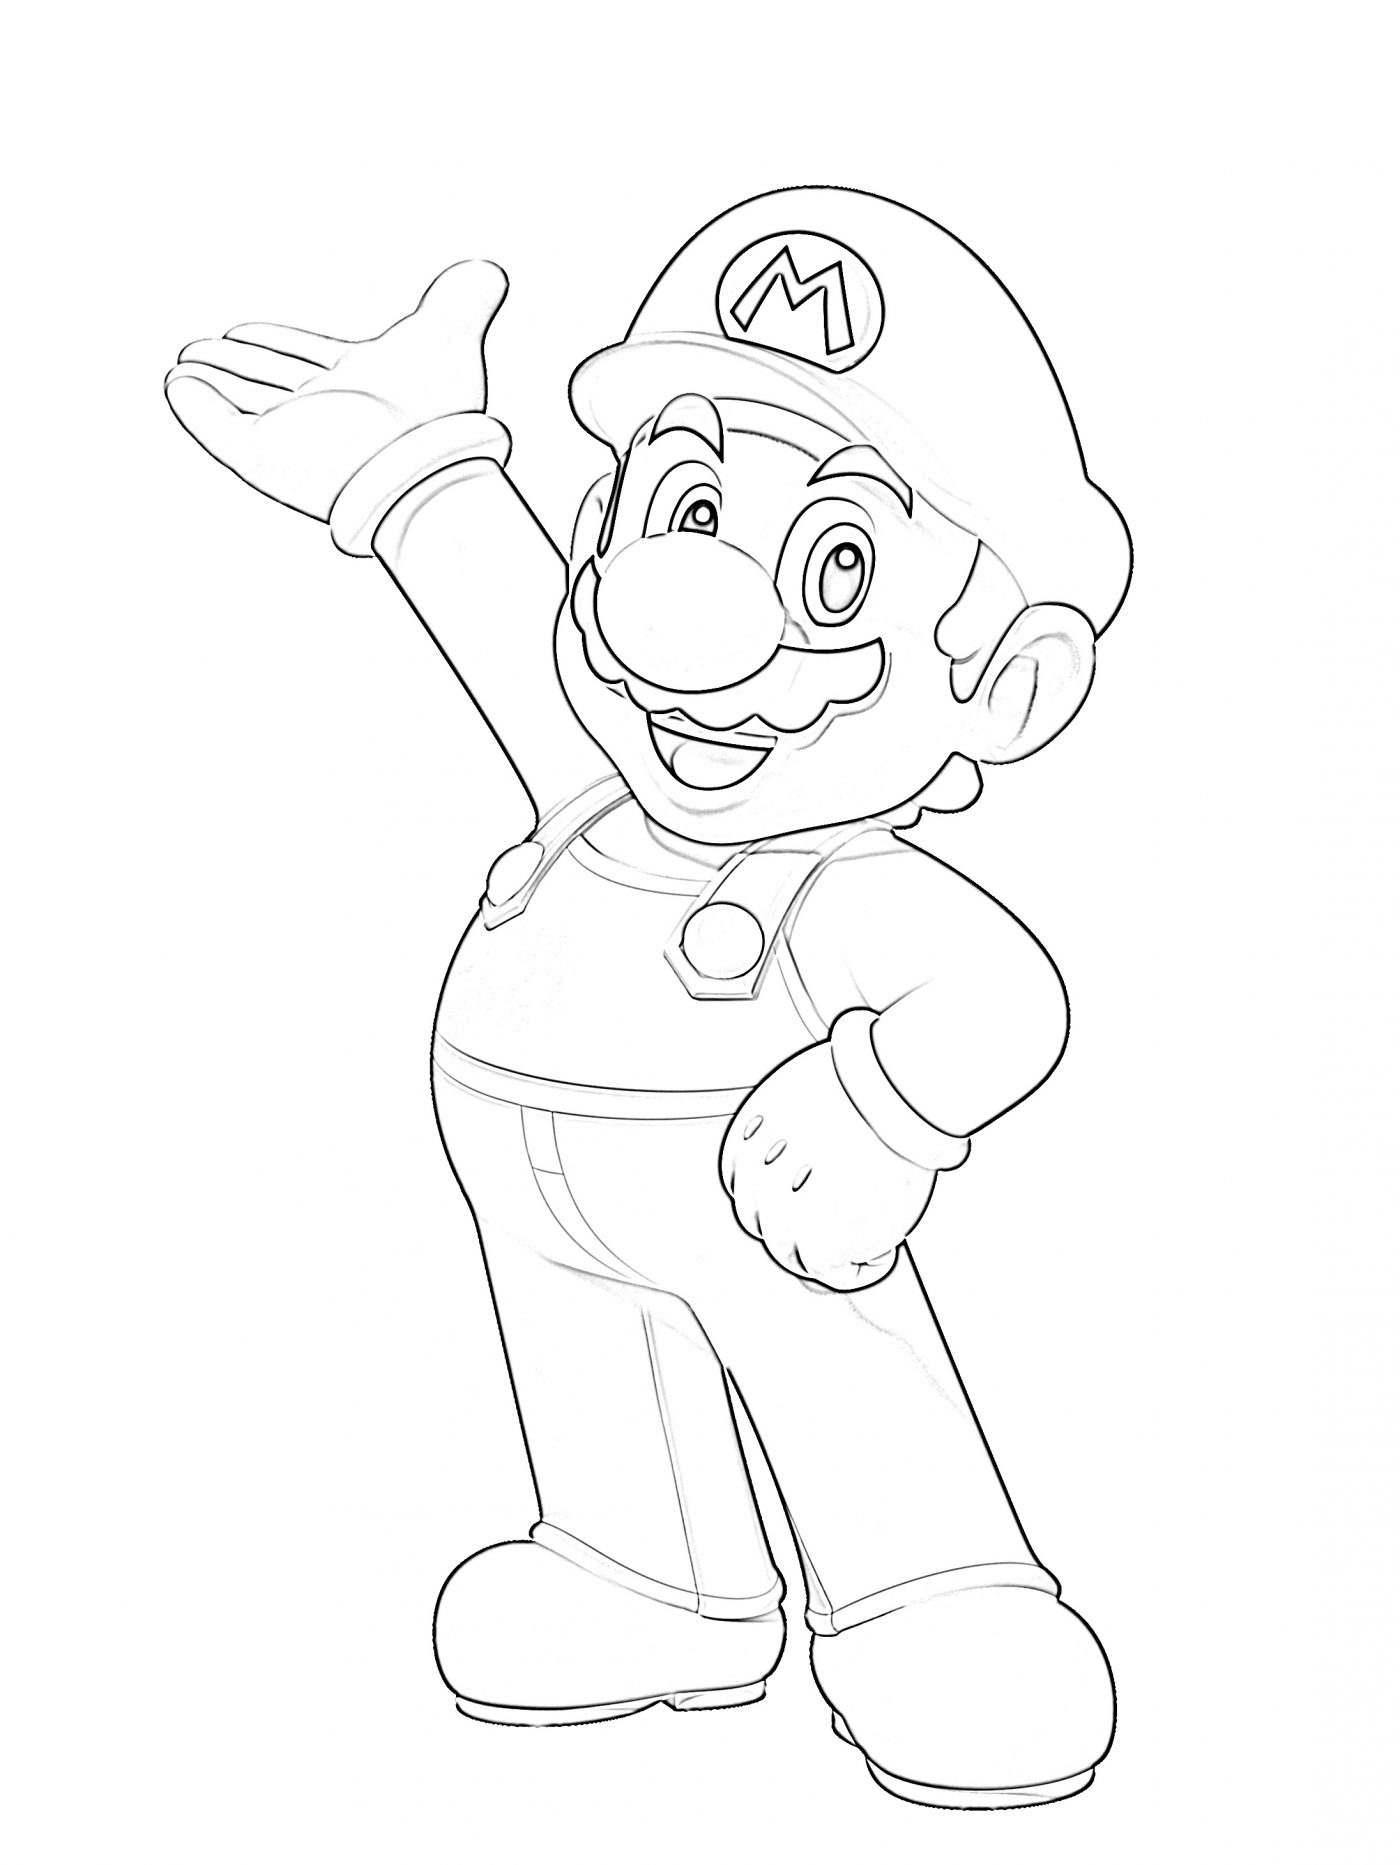 Printable Mario